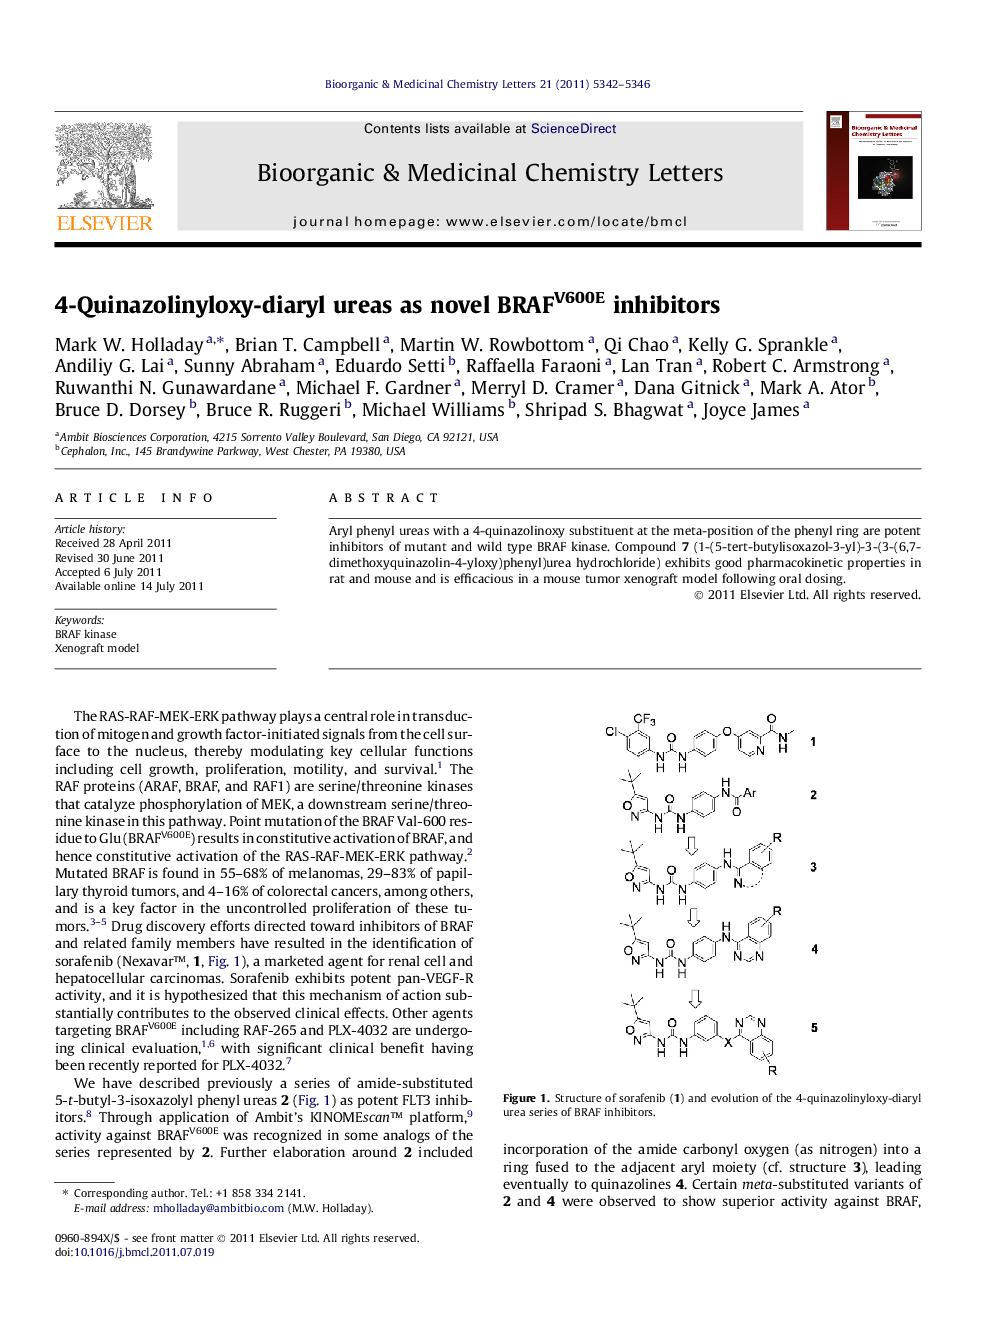 4-Quinazolinyloxy-diaryl ureas as novel BRAFV600E inhibitors